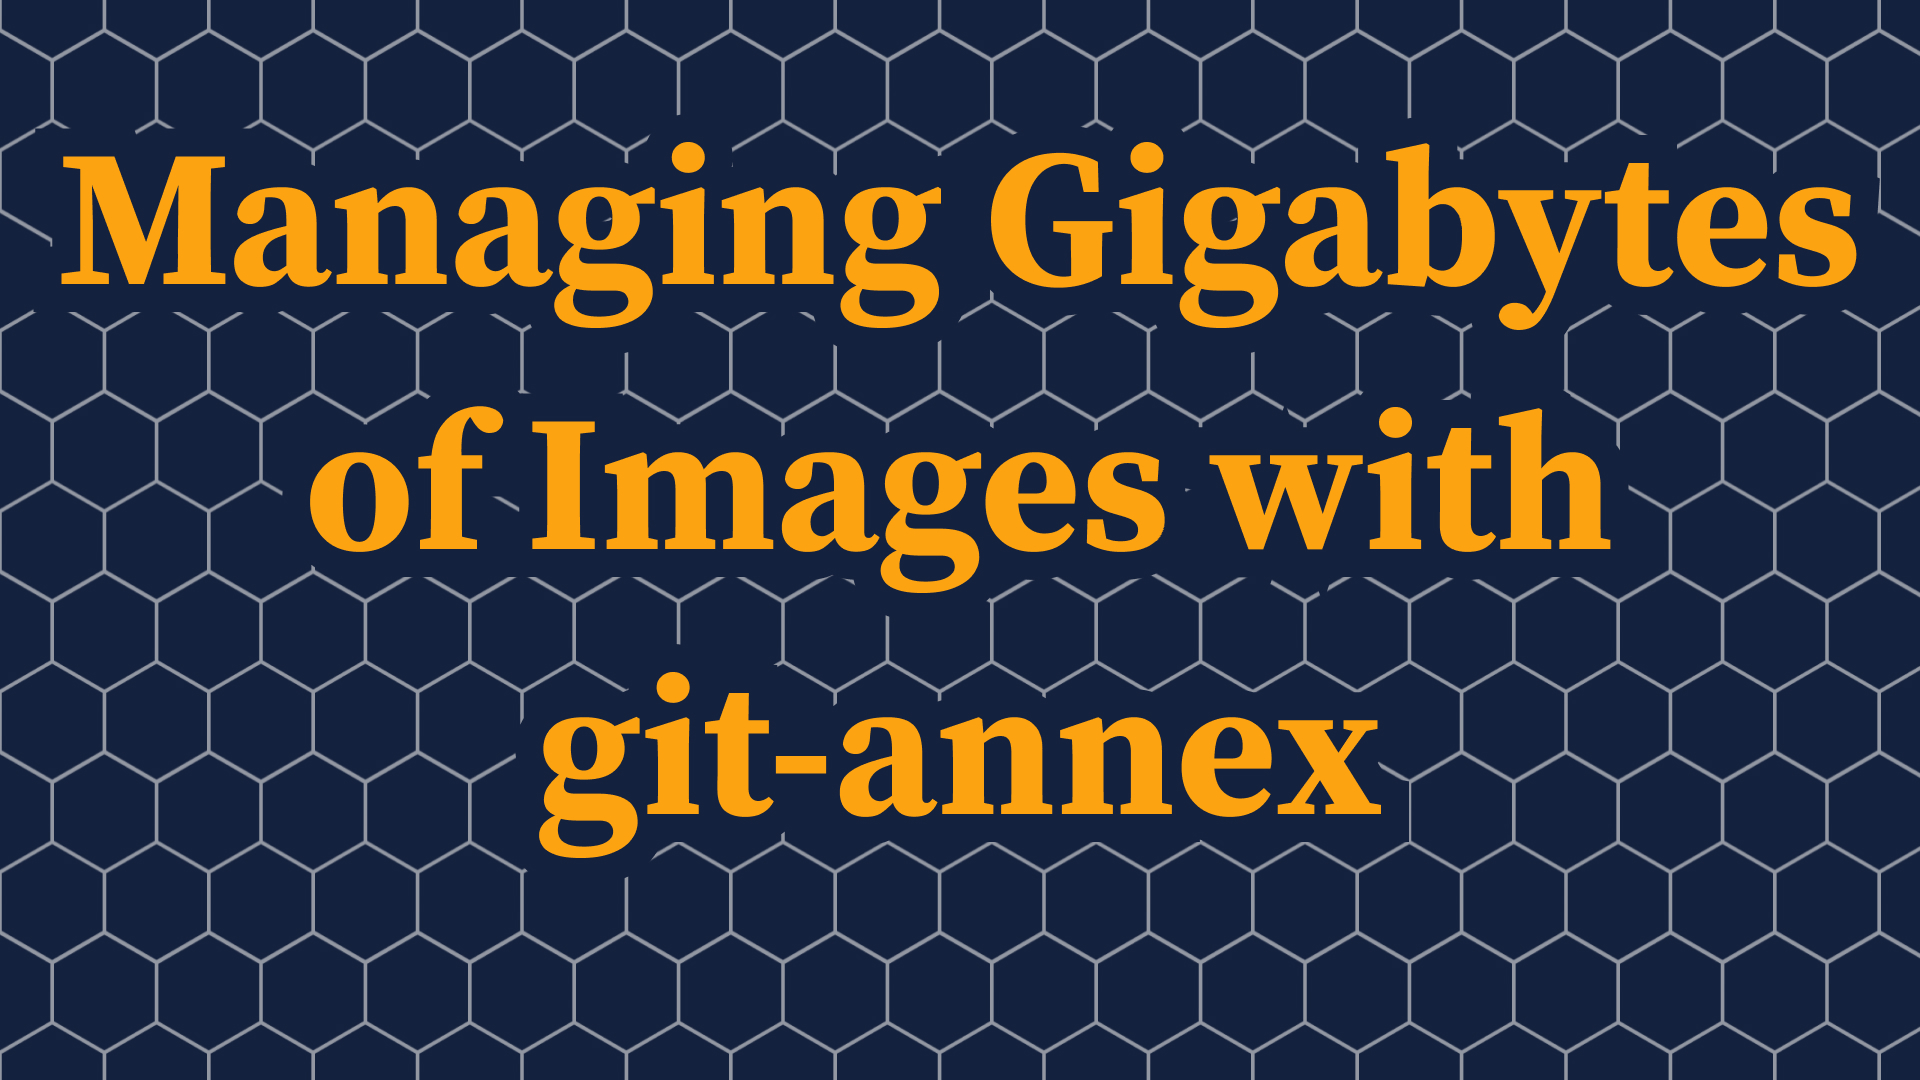 Managing Gigabytes of Images with git-annex